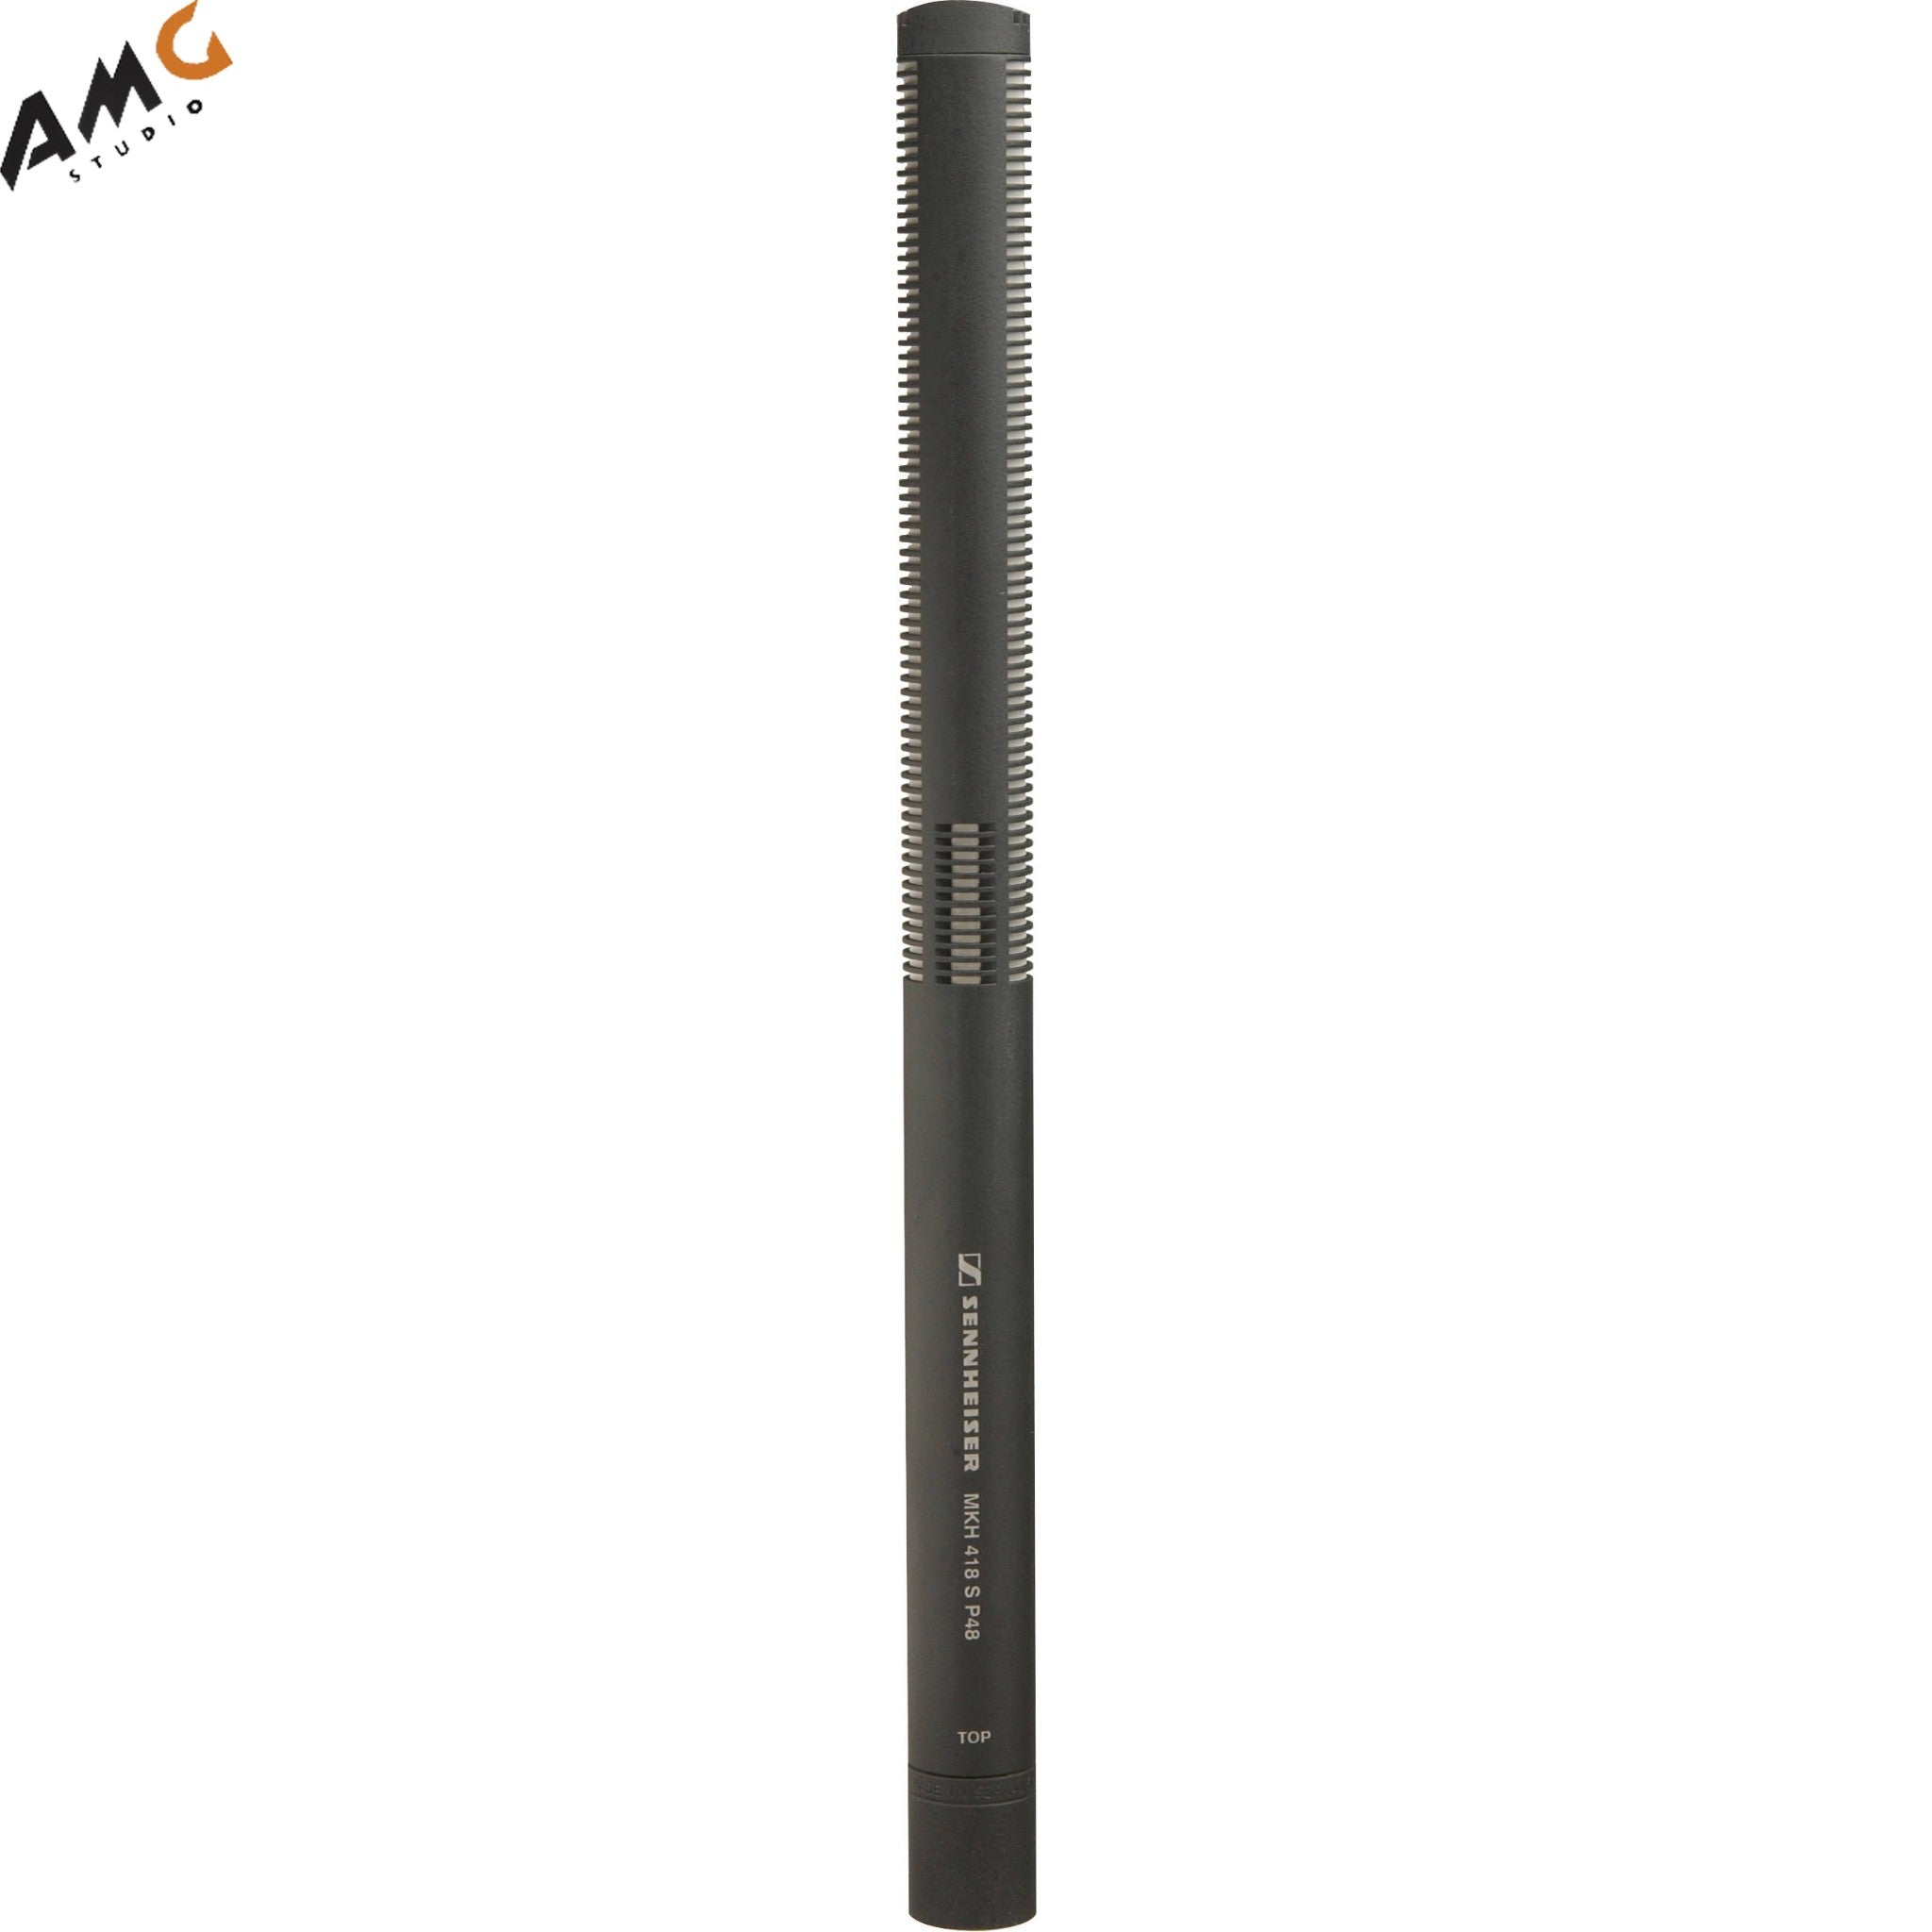 Sennheiser MKH418S - M/S Proffesional Stereo Shotgun Microphone MKH-418-S  Sennheiser  Microphone Studio AMG.